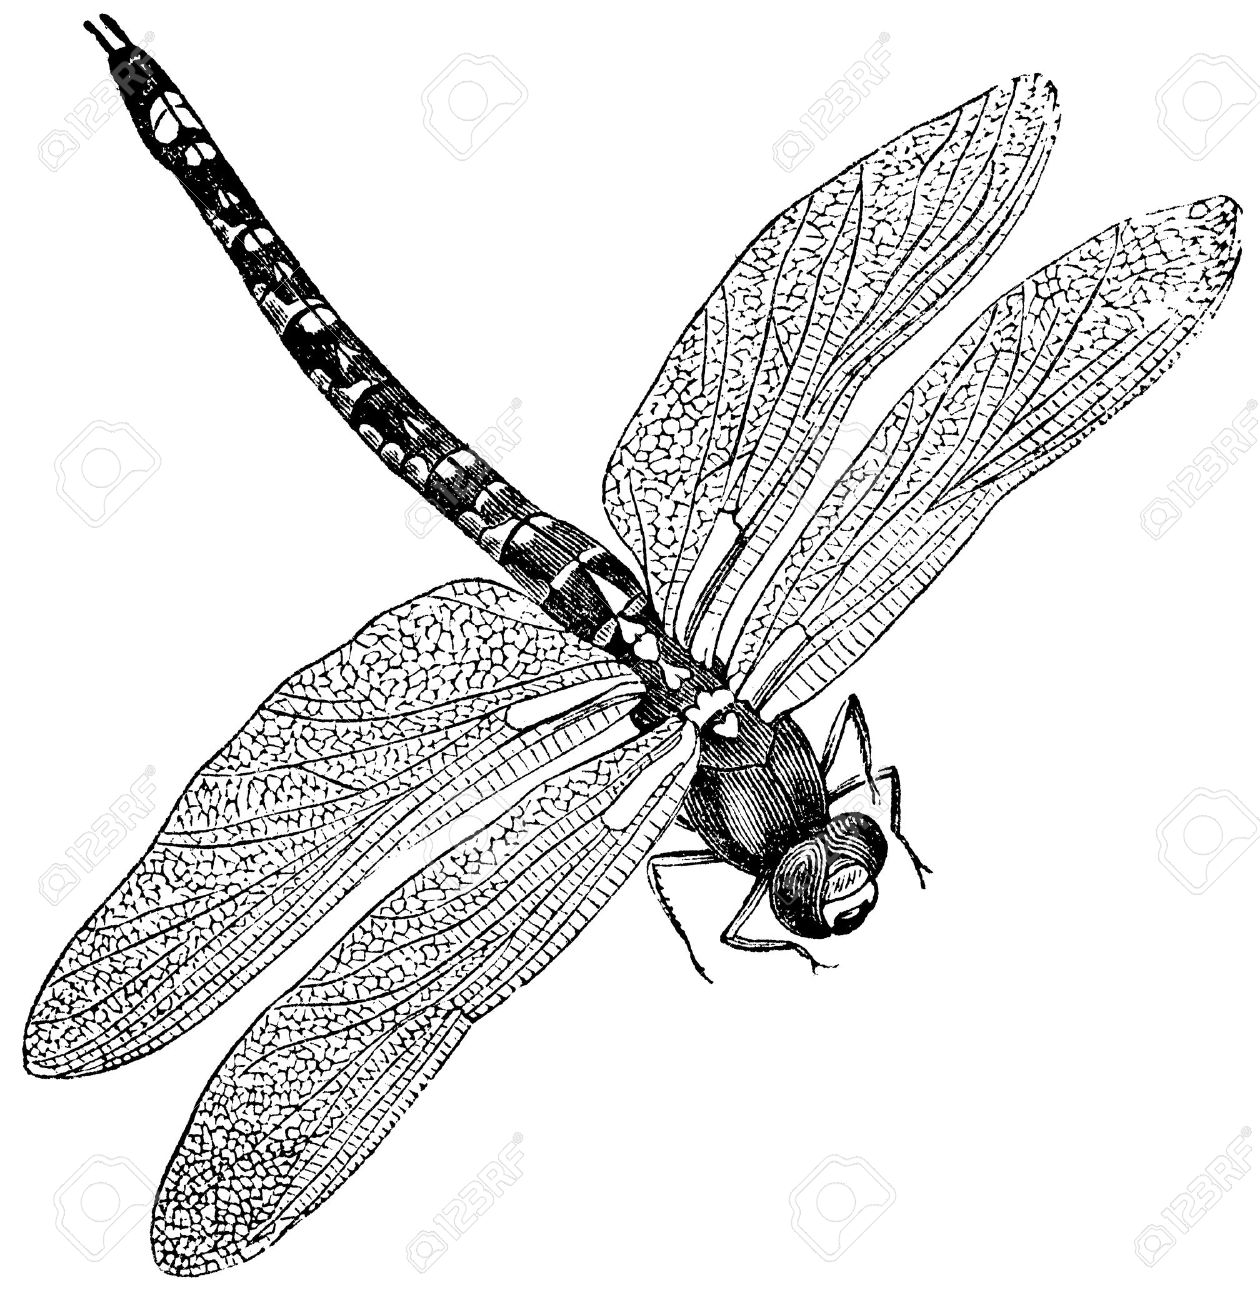 14128387-Vintage-engraved-illustration-of-a-dragonfly-isolated-against-white--Stock-Illustration.jpg